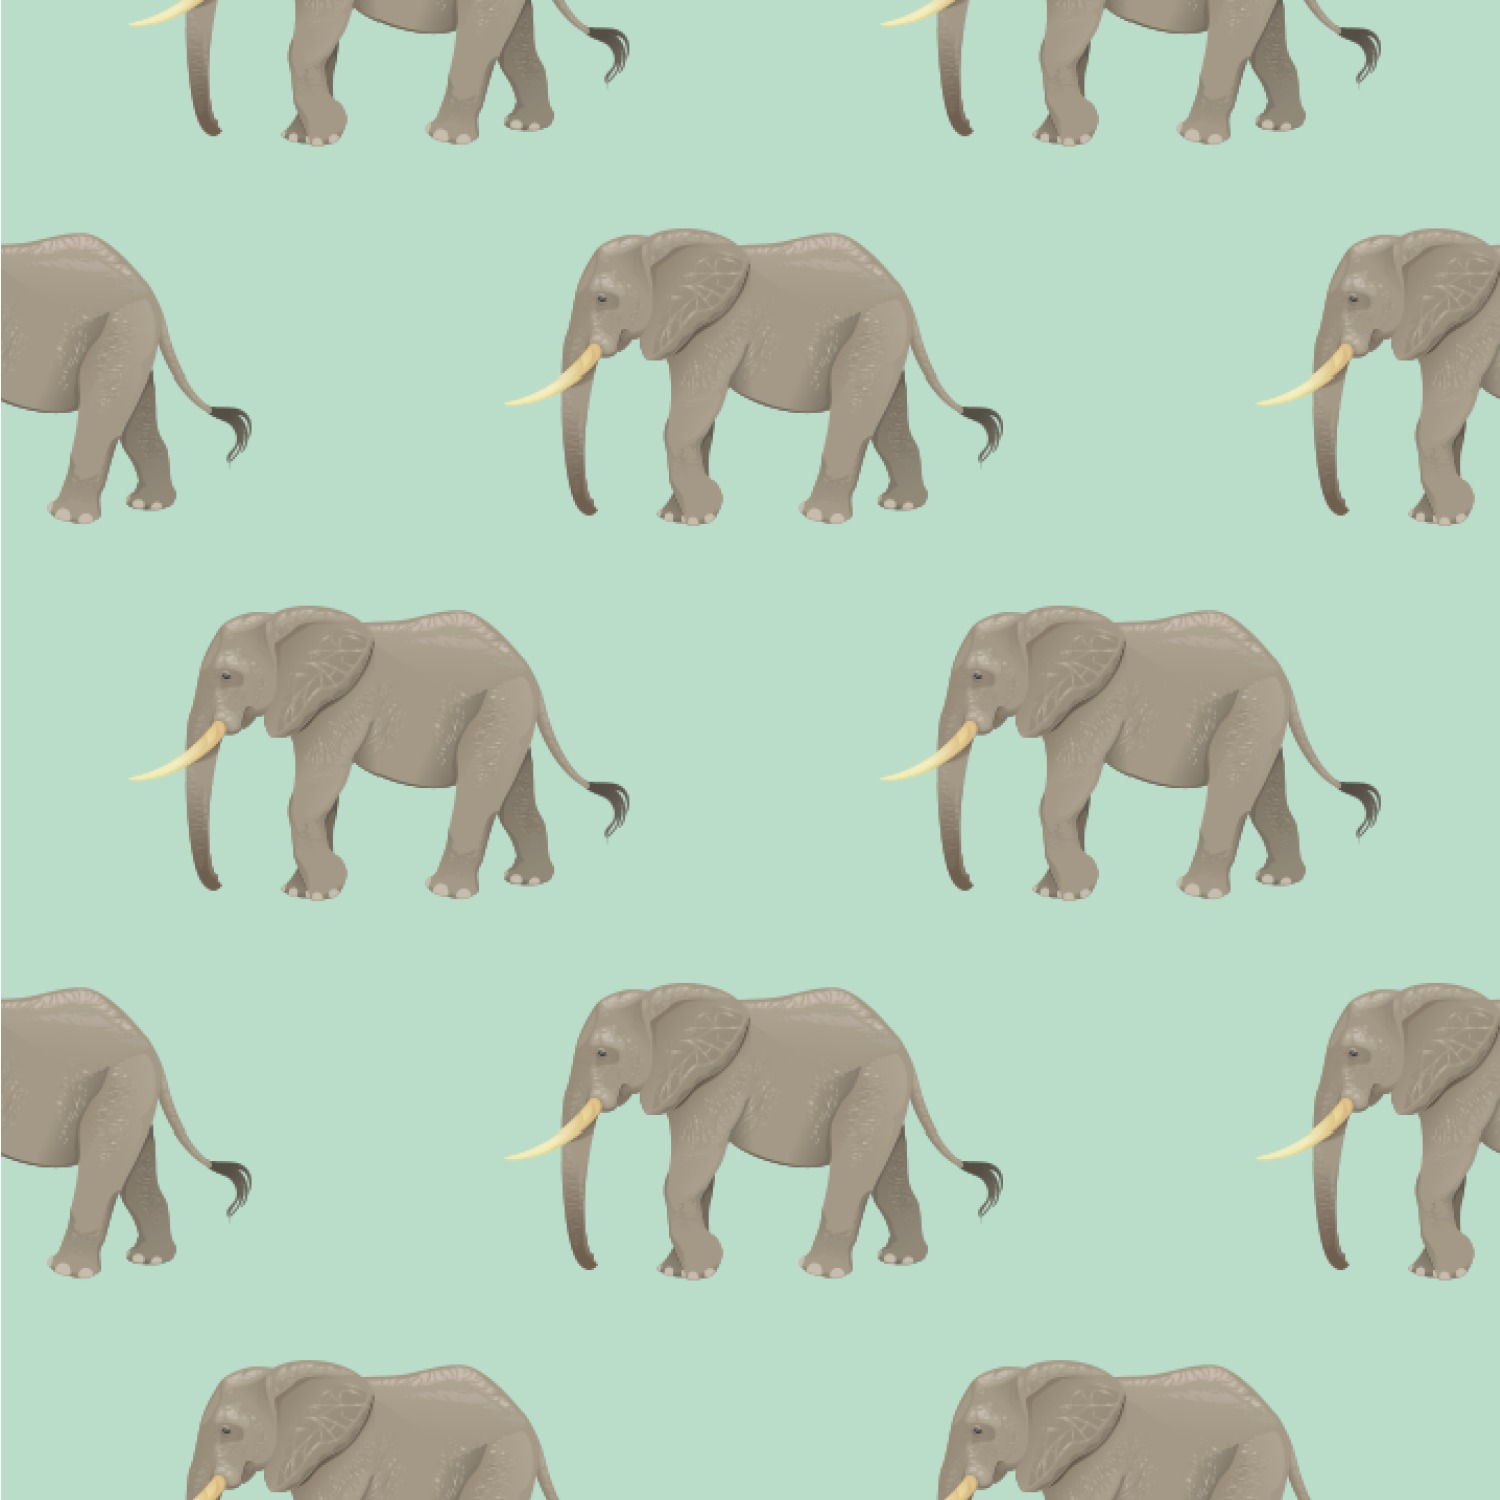 A pattern of elephants on green background - Elephant